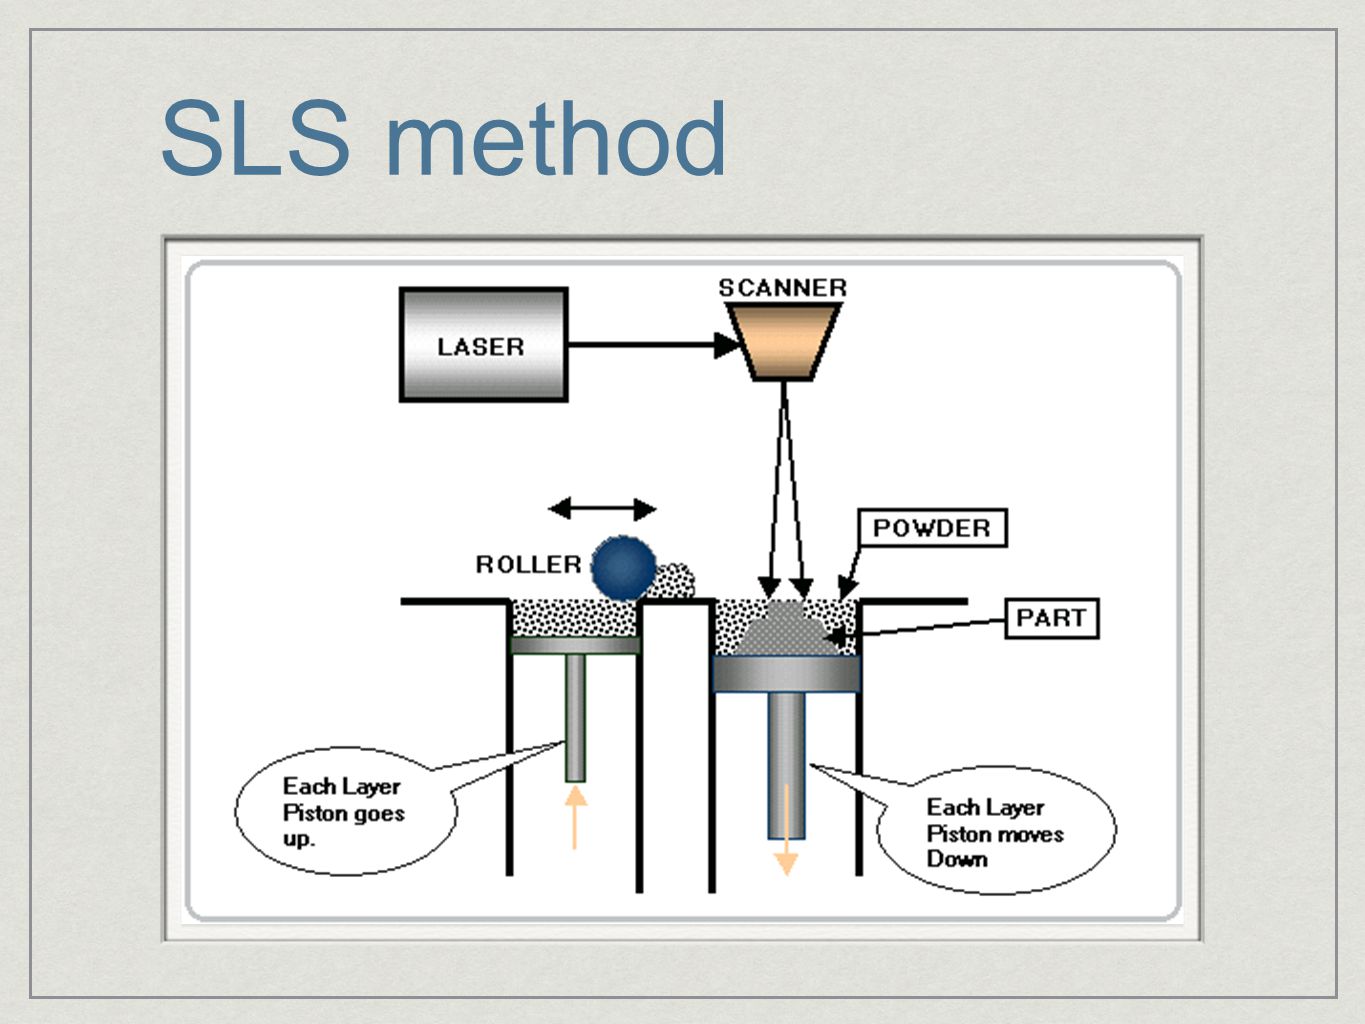 SLS method